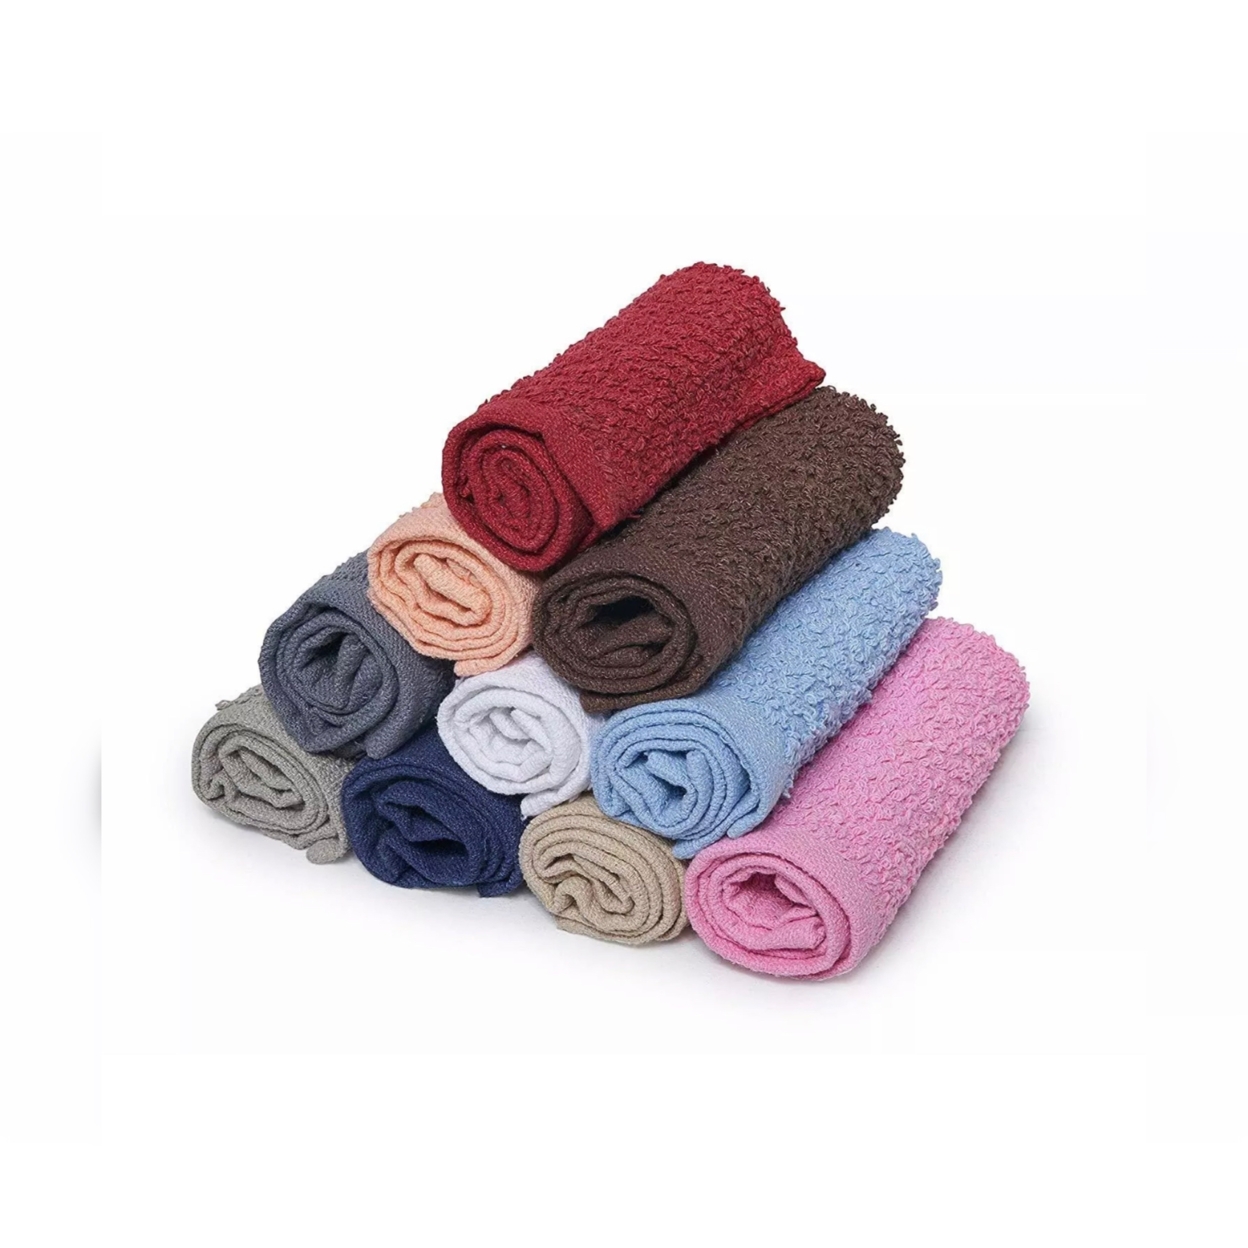 12-Pack: 100% Cotton Absorbent Kitchen Washcloth Towel Set 11x11 Face Cloths